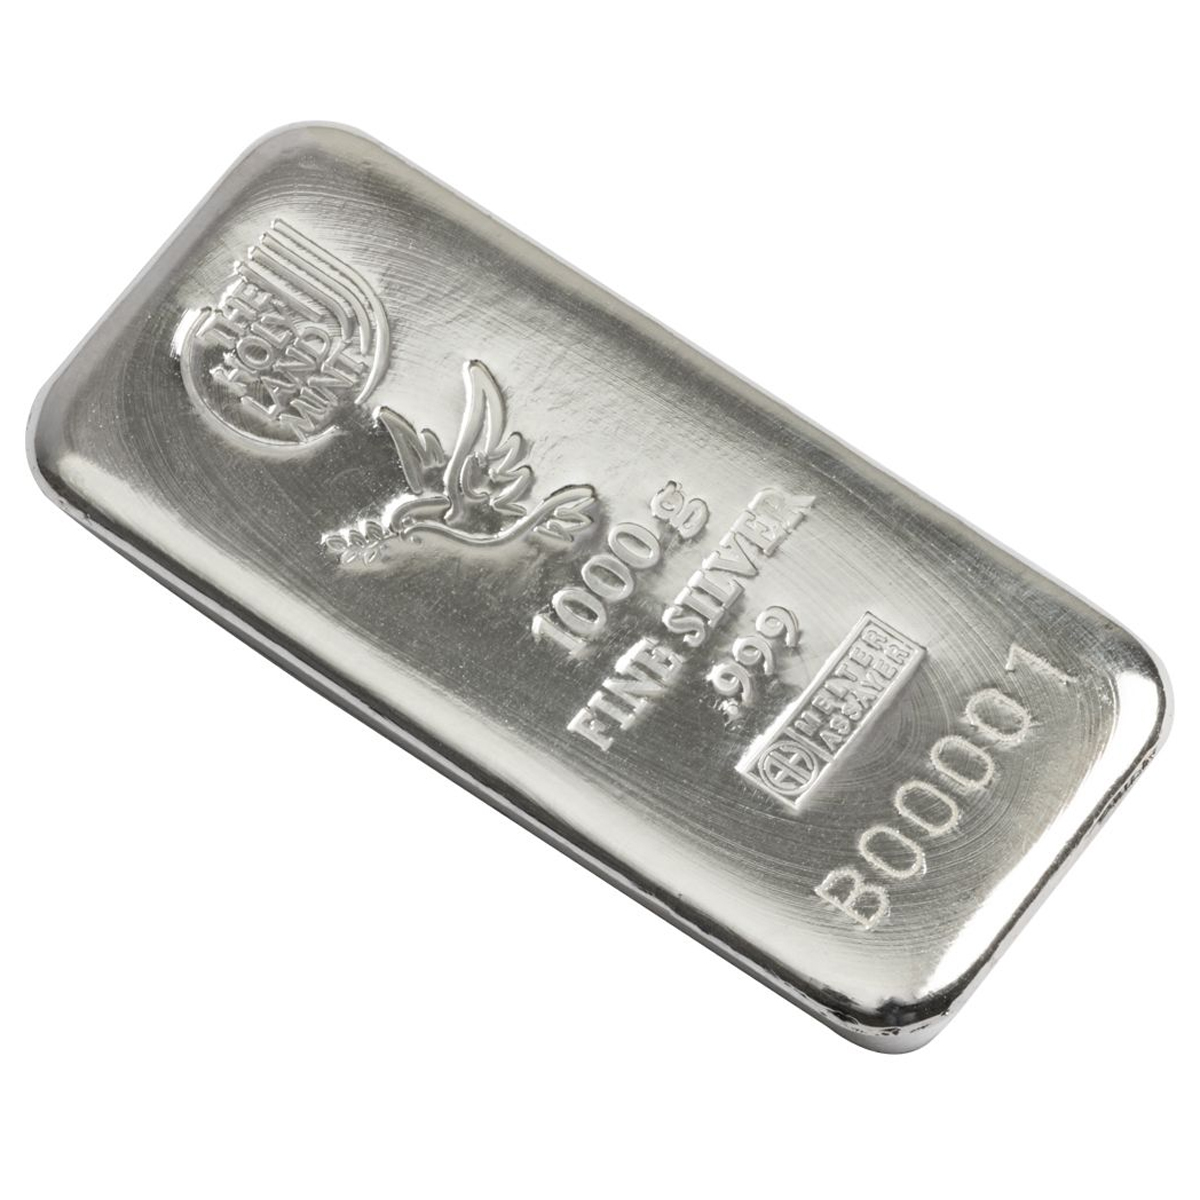 1000 grams Silver Cast Bar - Dove of Peace